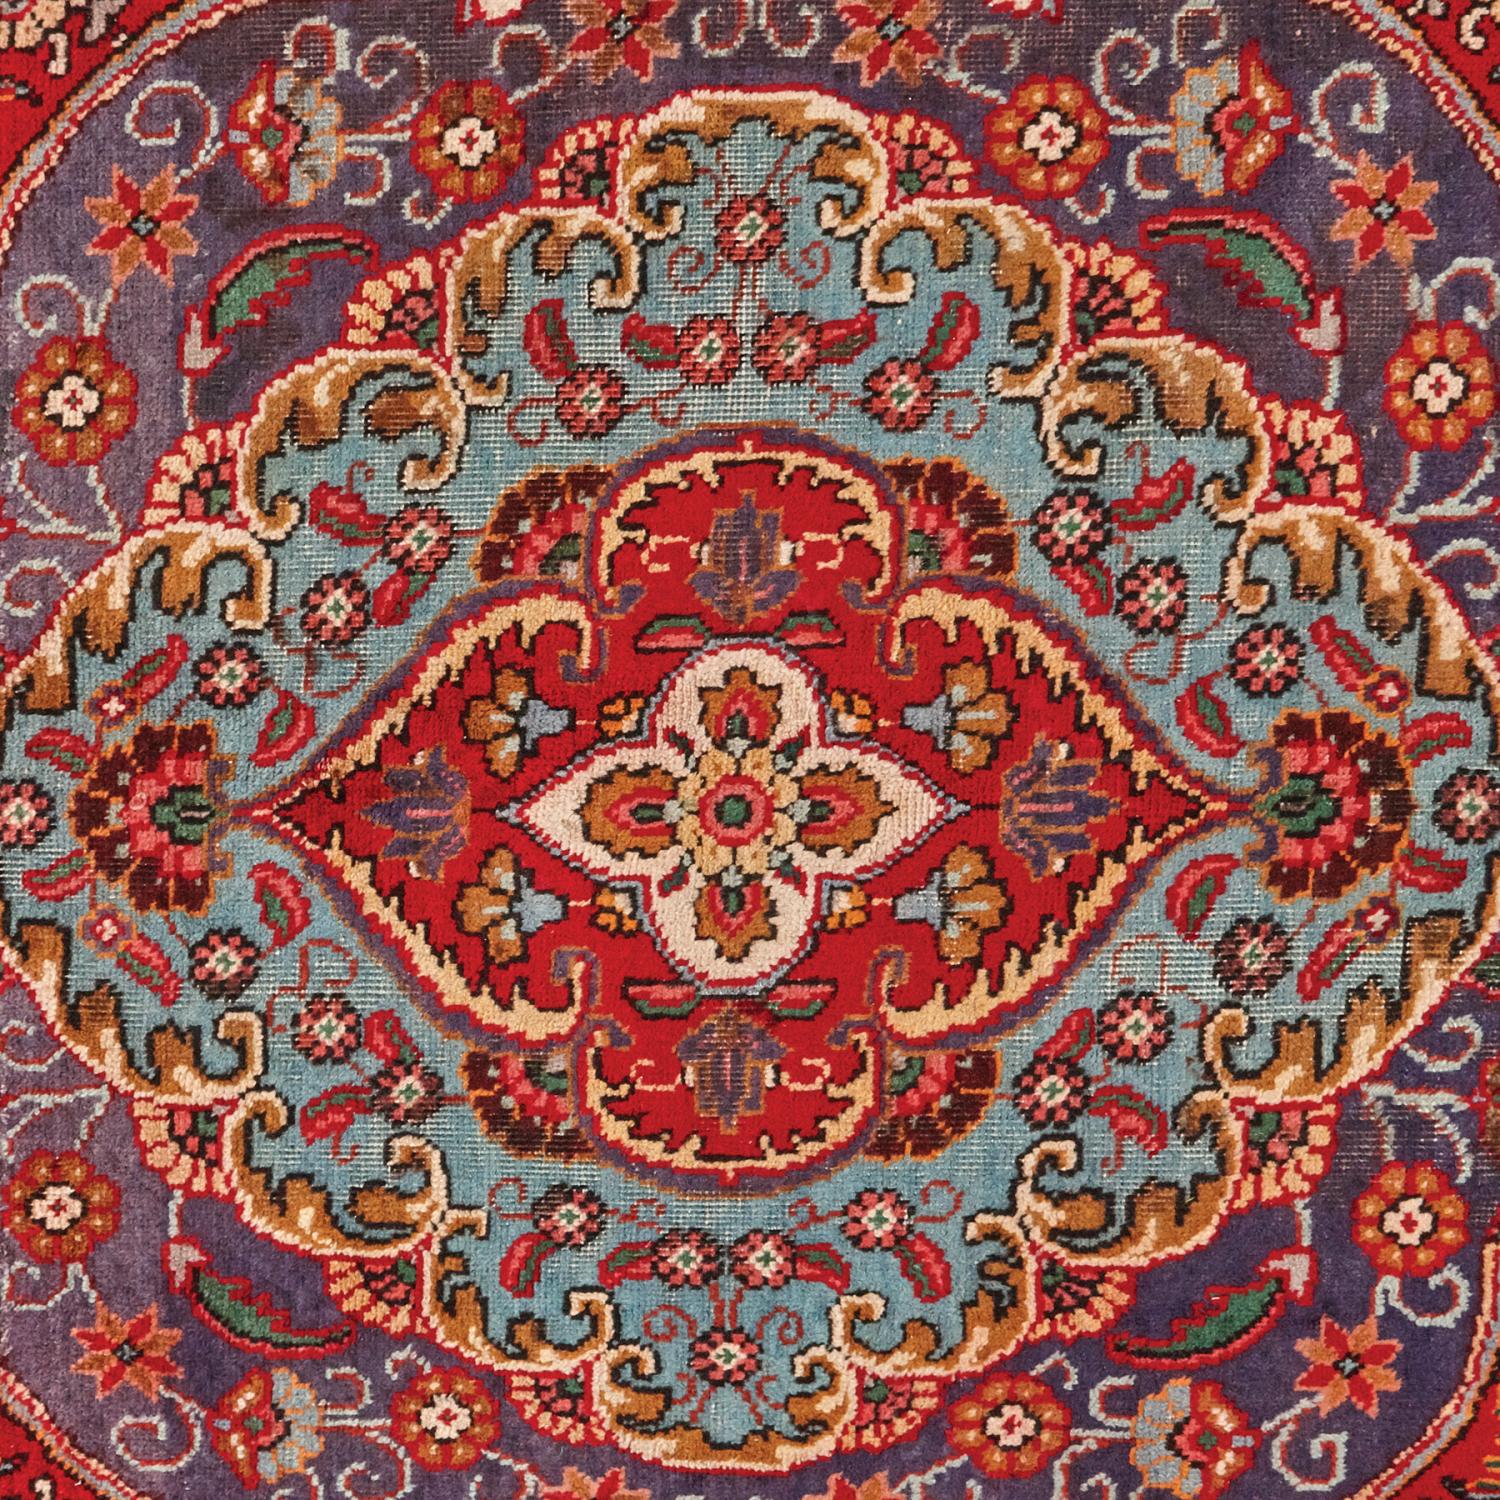 A Large Kashan Persian Carpet - Price Estimate: $1600 - $2400